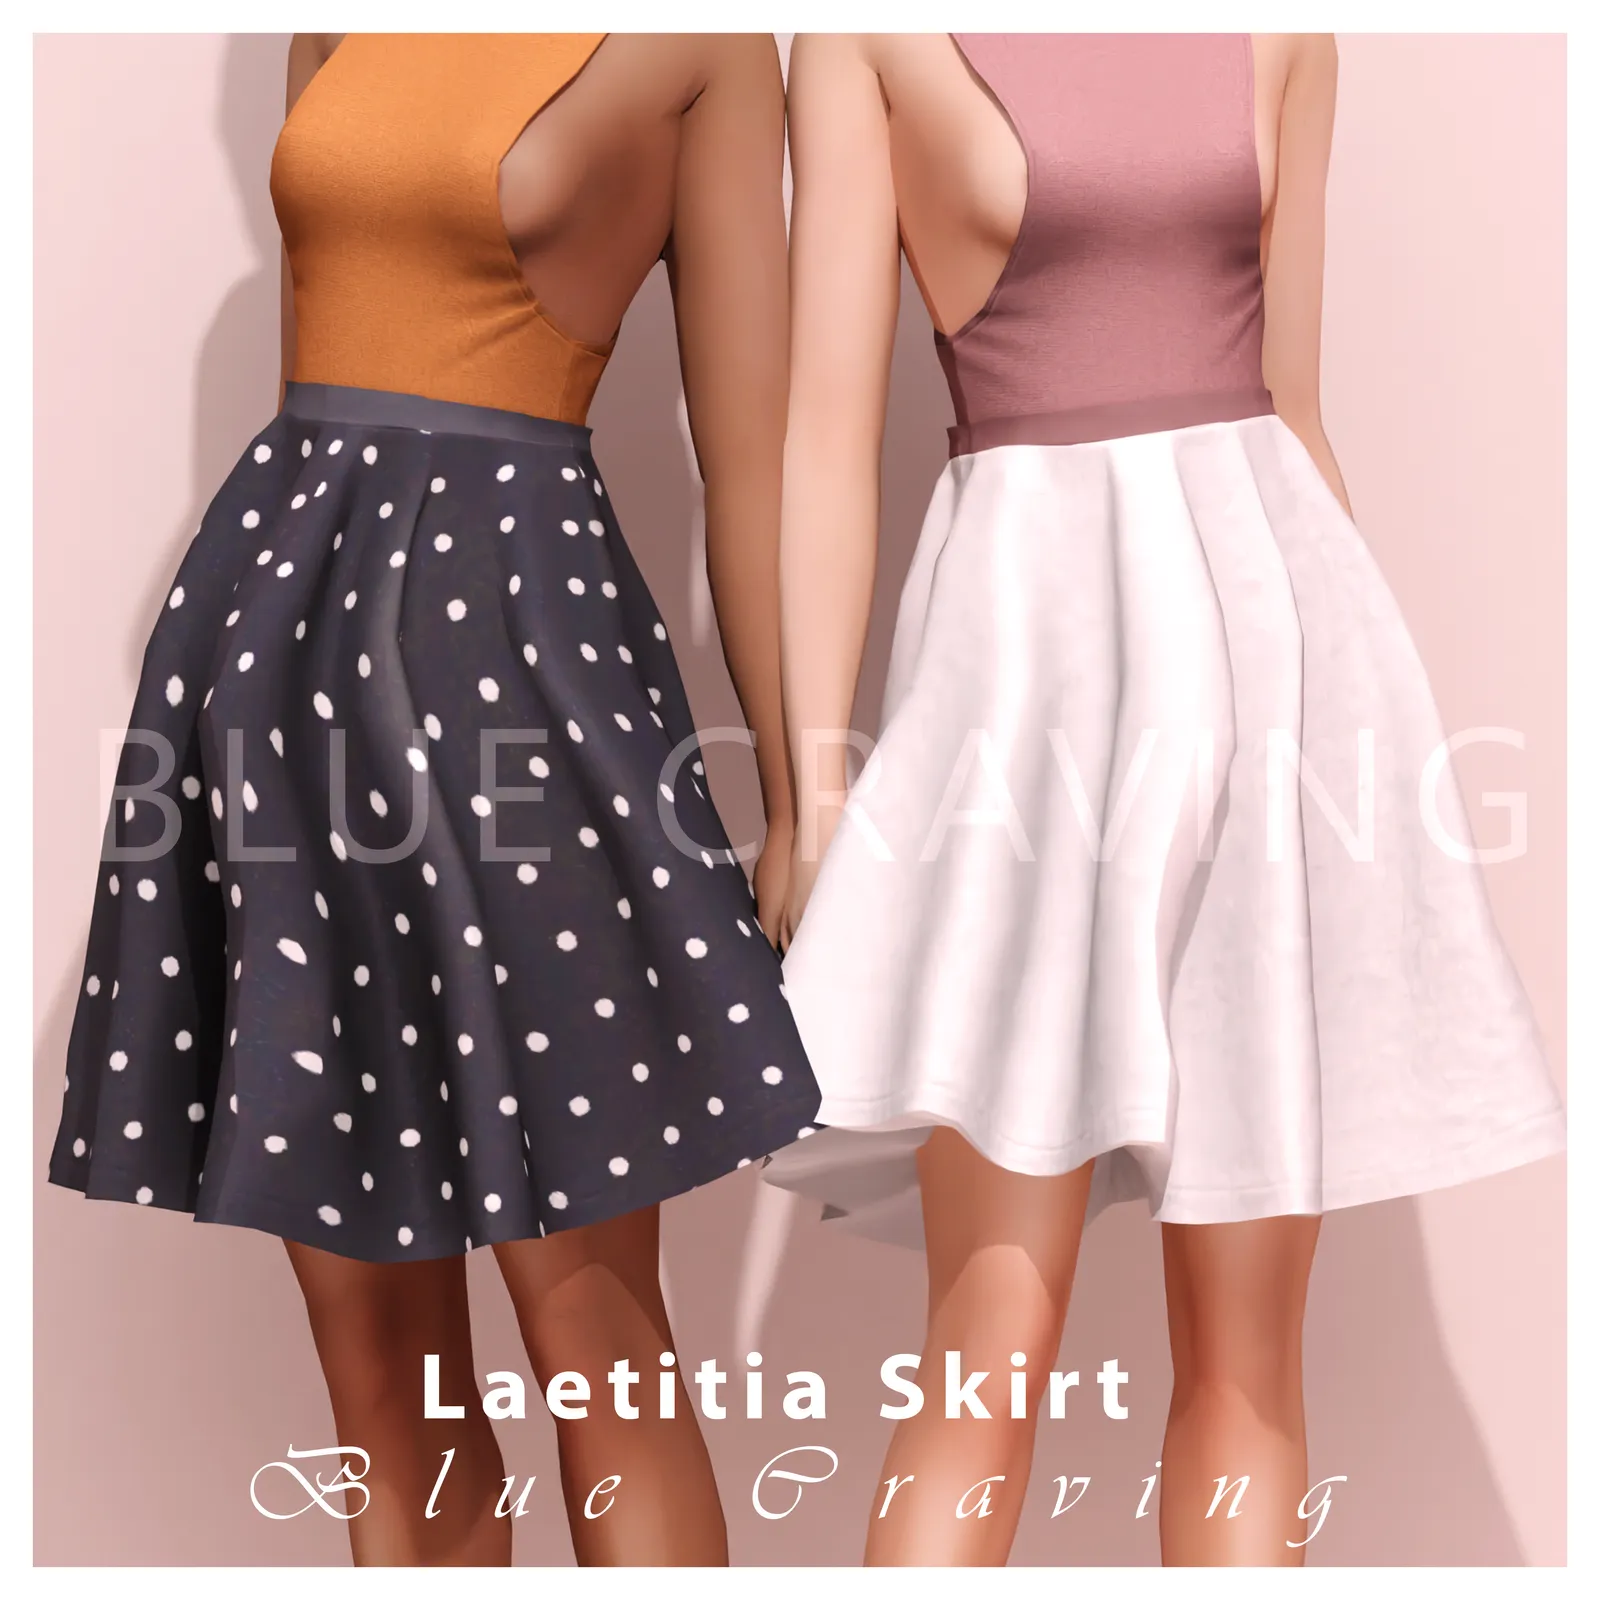 Laetitia Skirt